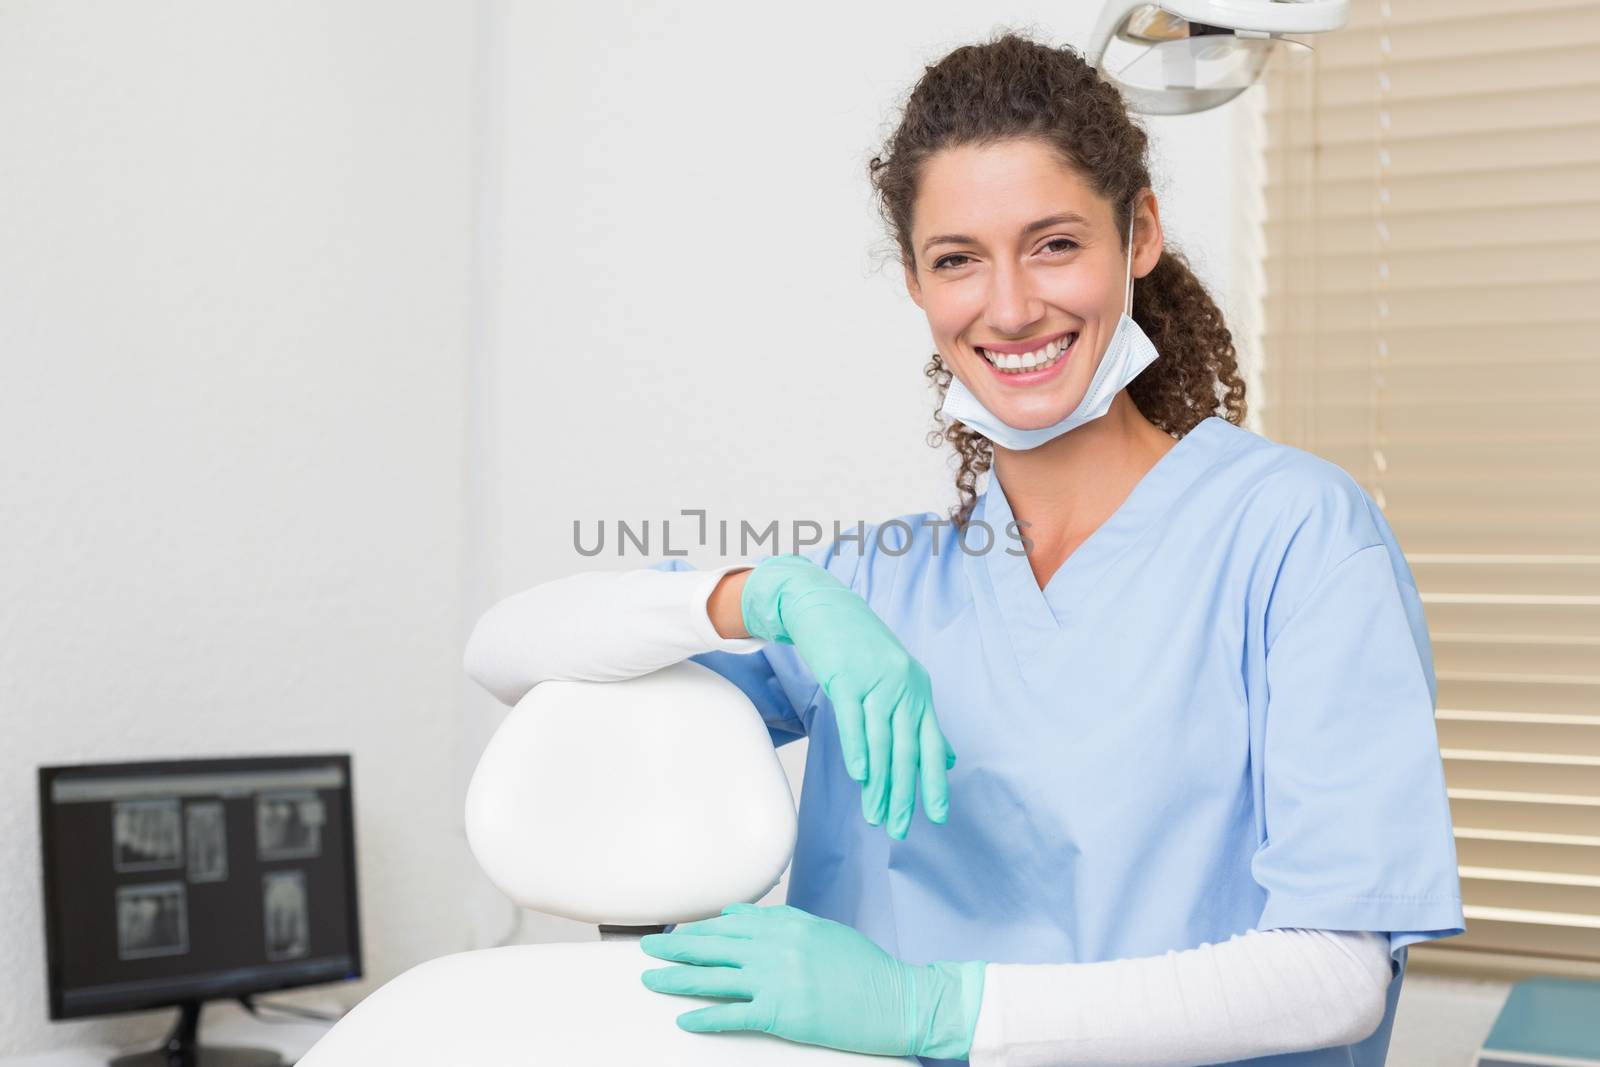 Dentist in blue scrubs smiling at camera by Wavebreakmedia